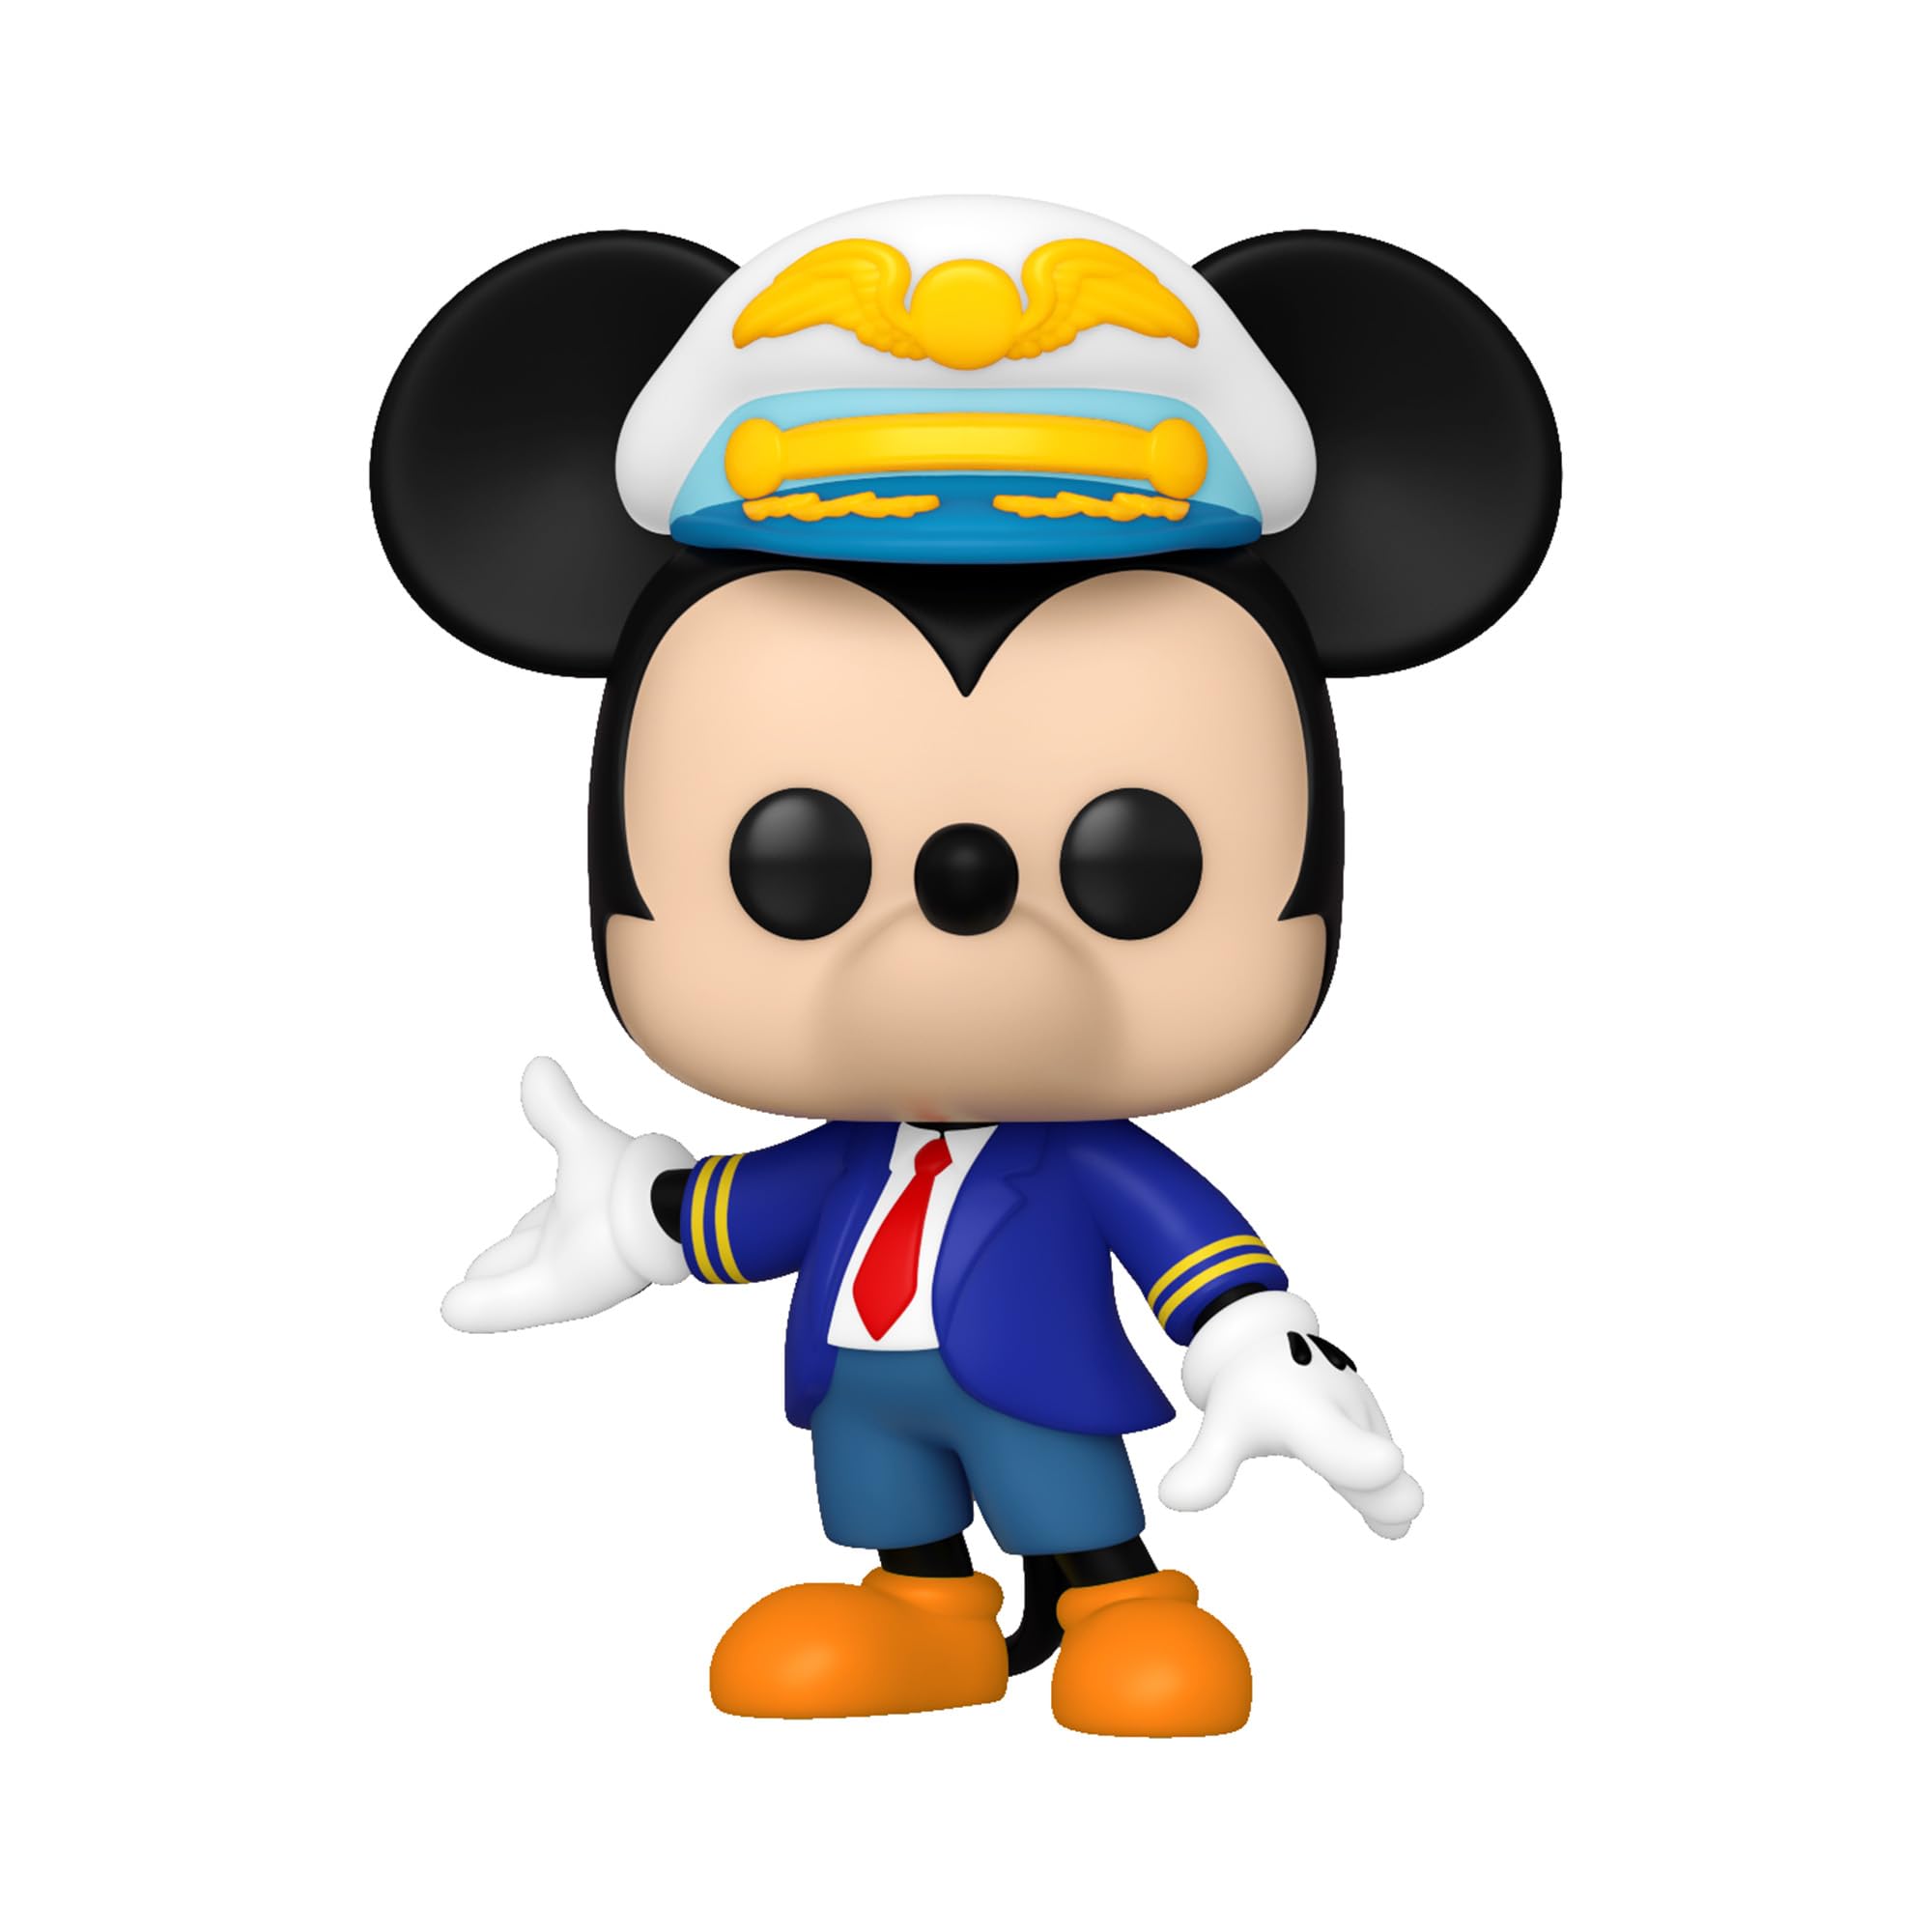 Funko Disney Mickey Mouse One : Walt’s Plane - Pilot Mickey Mouse Pop!